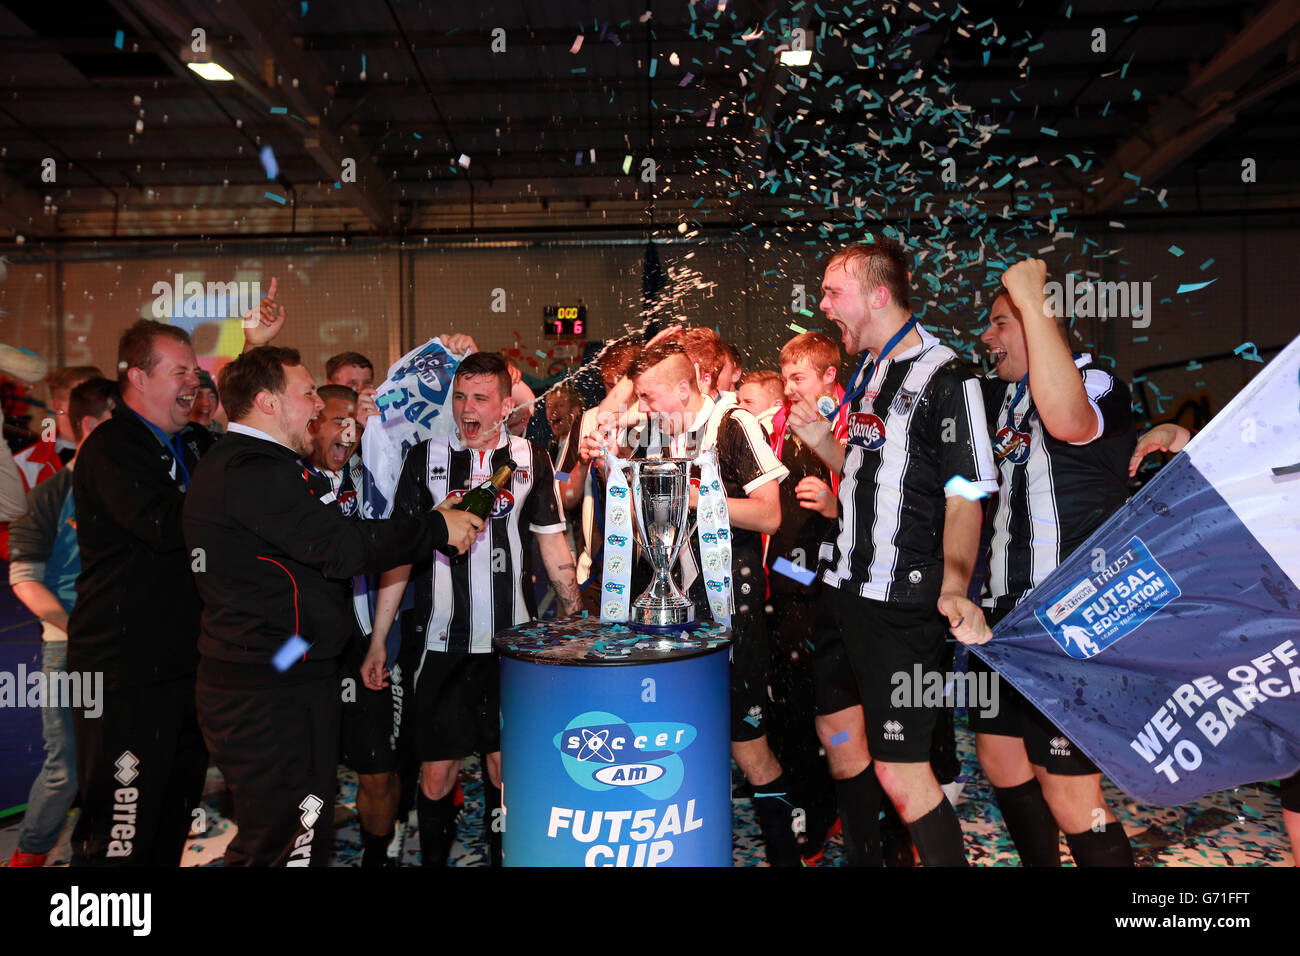 Grimsby Town celebrate winning the Soccer AM Futsal Final Stock Photo